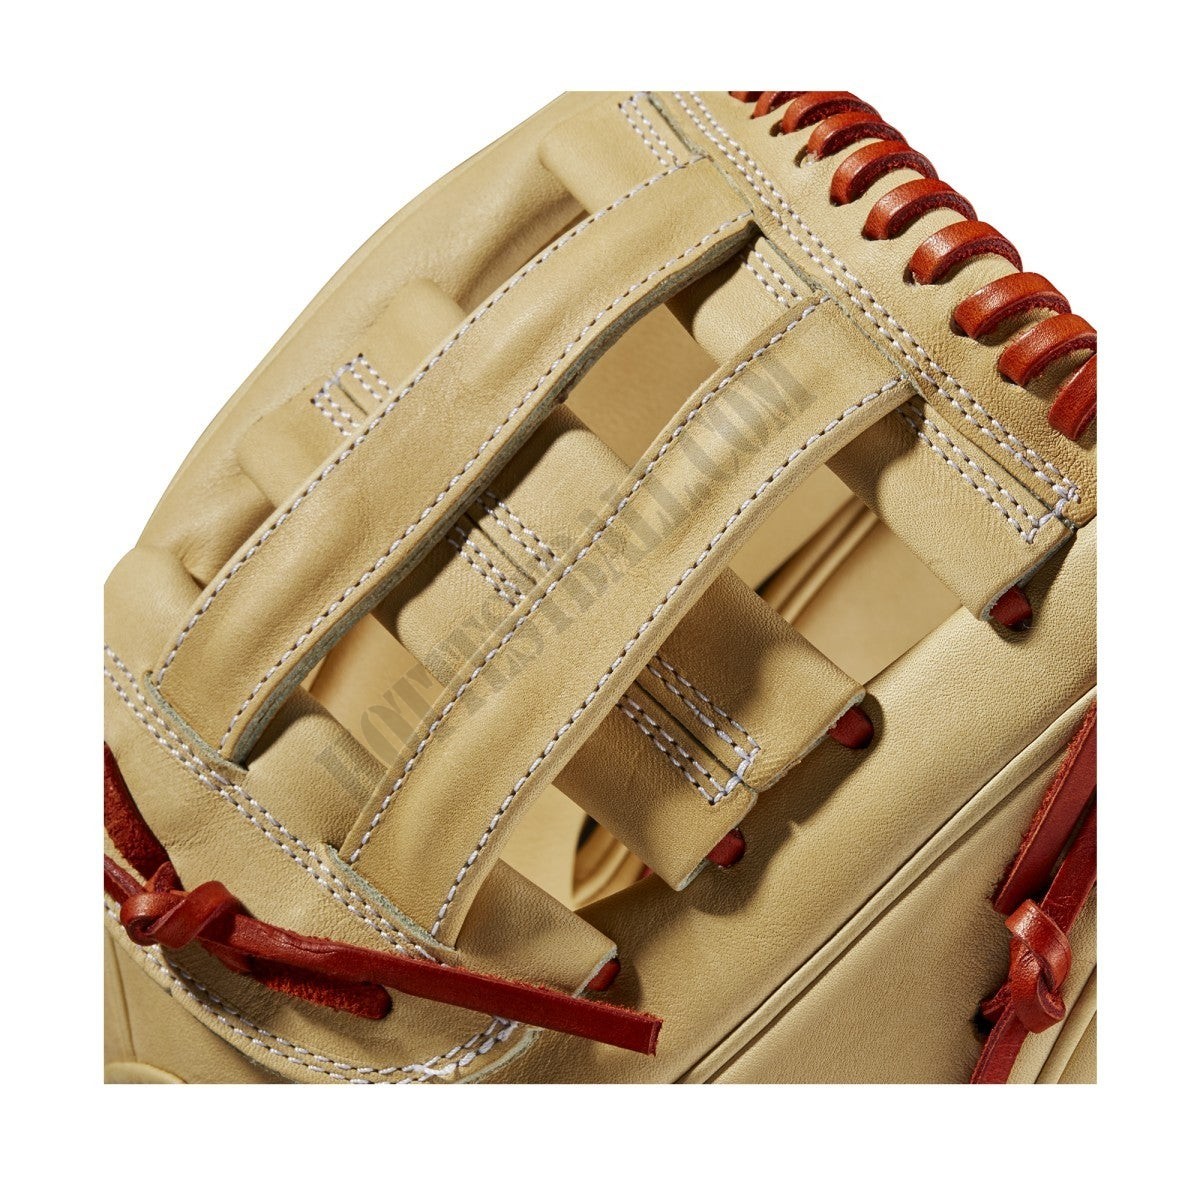 2021 A2000 PP05 11.5" Infield Baseball Glove ● Wilson Promotions - -5